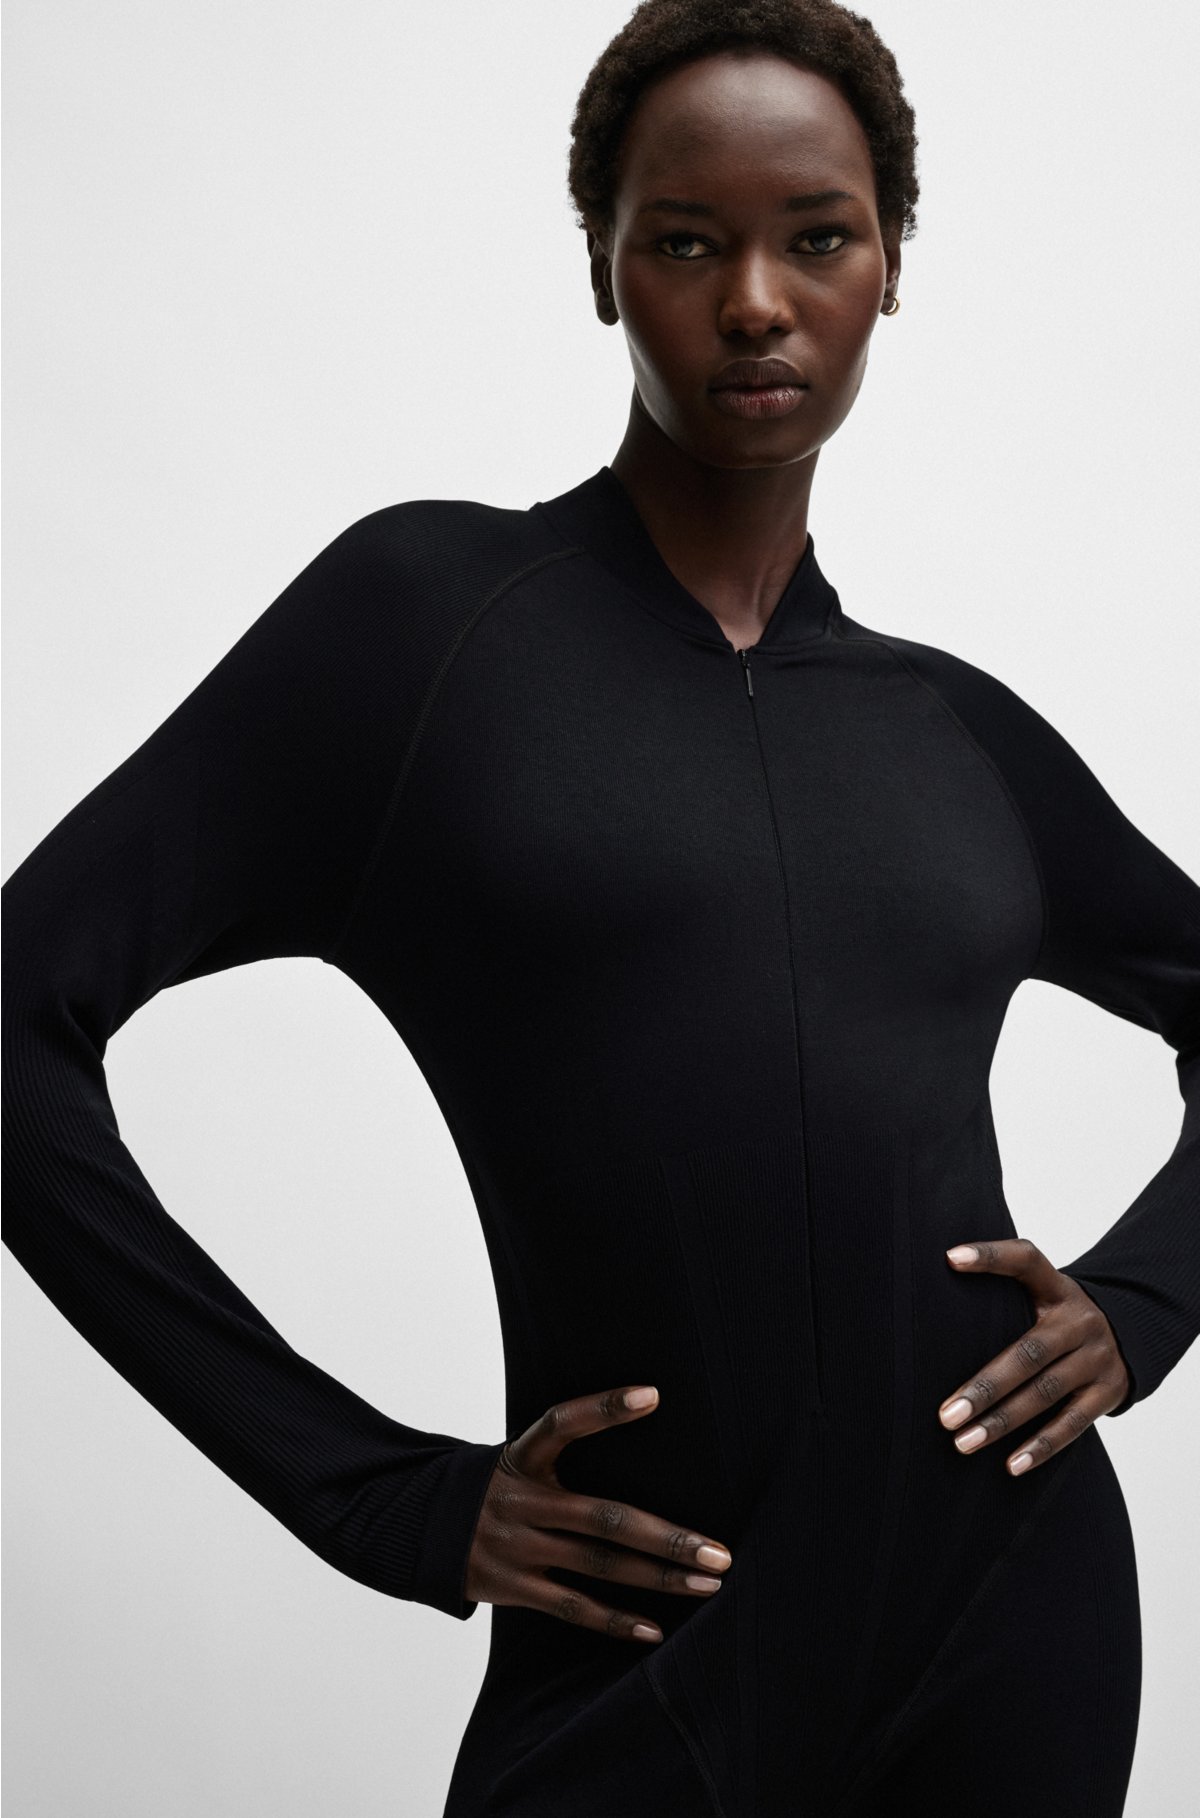 NAOMI x BOSS full-length bodysuit in stretch jersey, Black